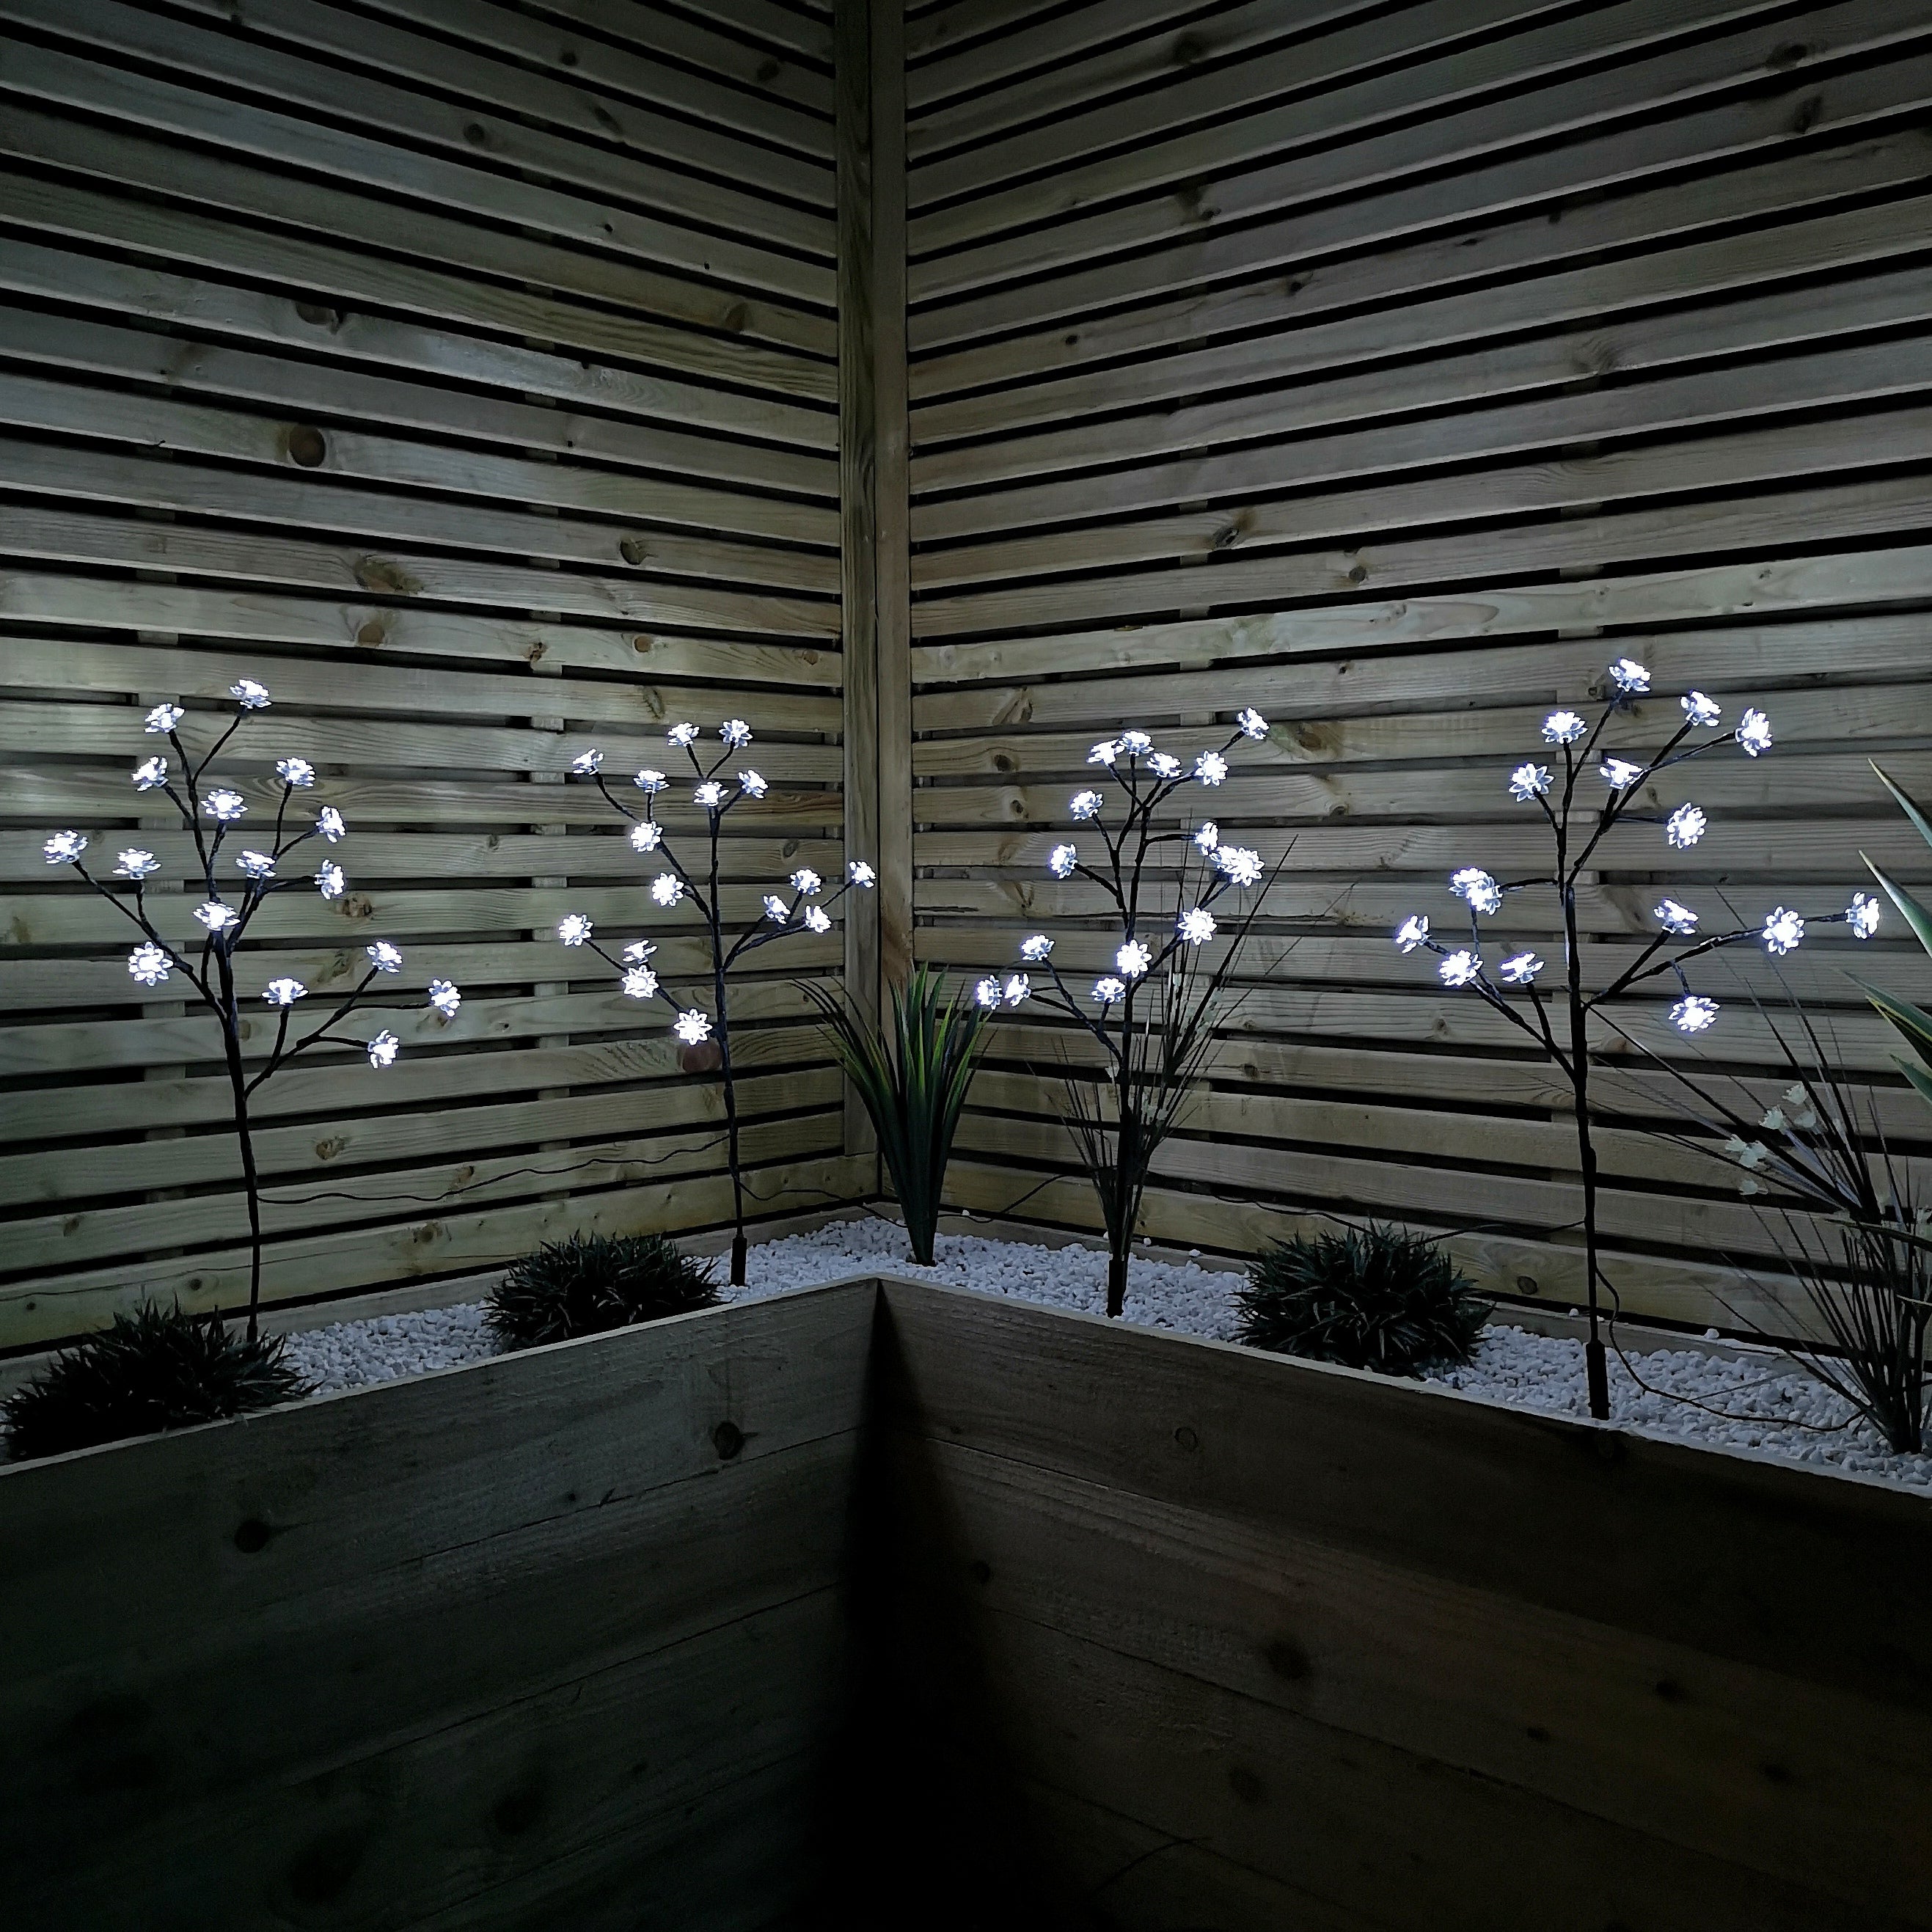 Set of 4 60cm Light up Lotus Christmas Path Lights with 64 White LEDs